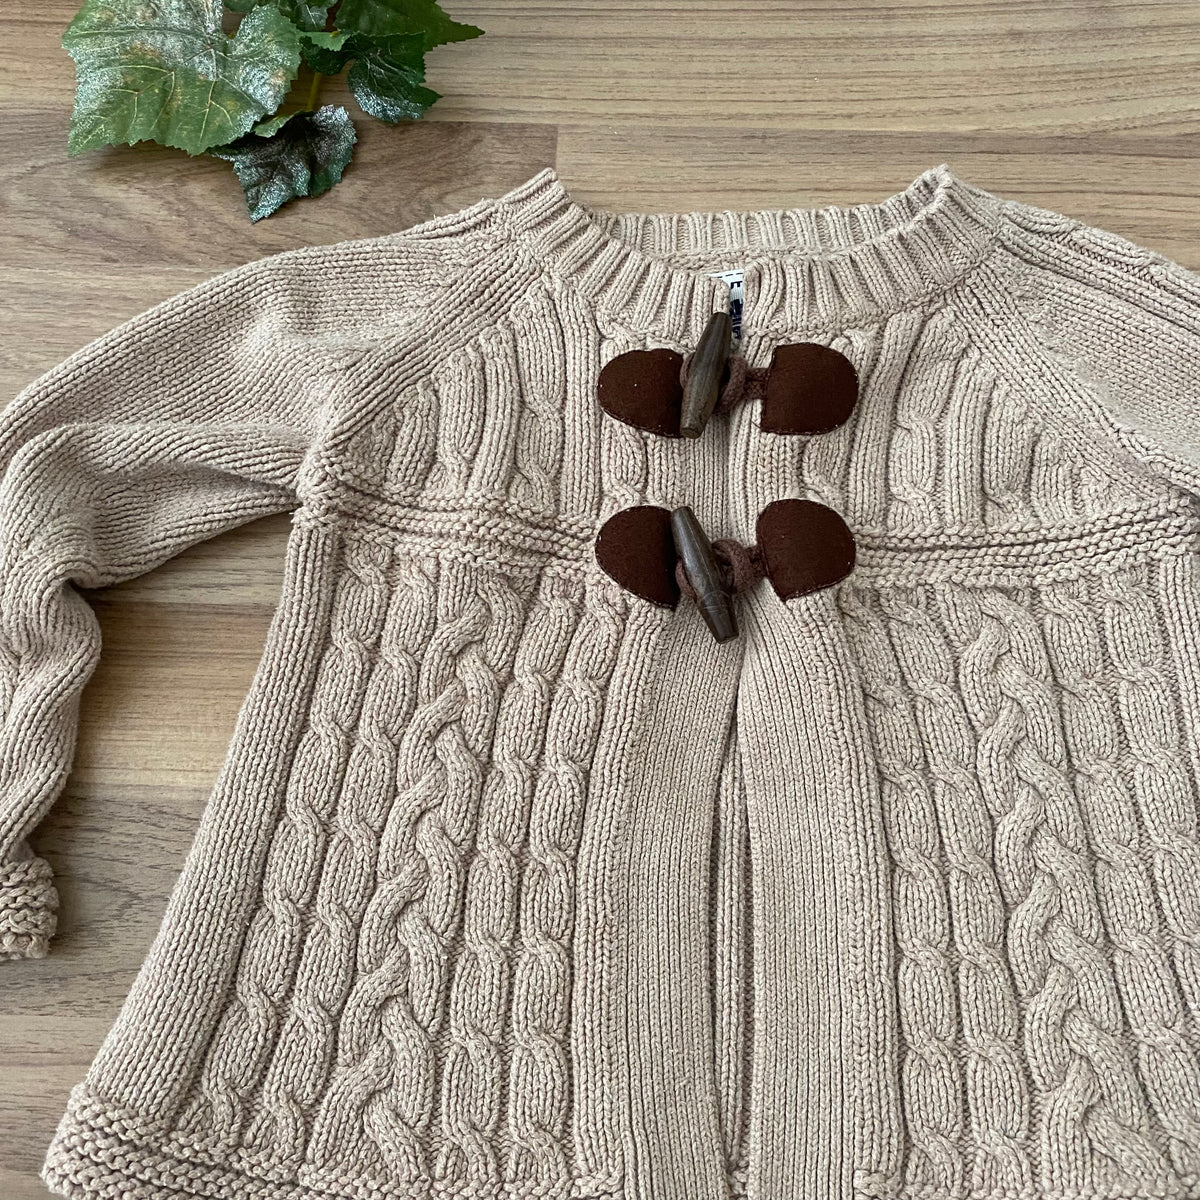 Cardigan Sweater (Girls Size 3)